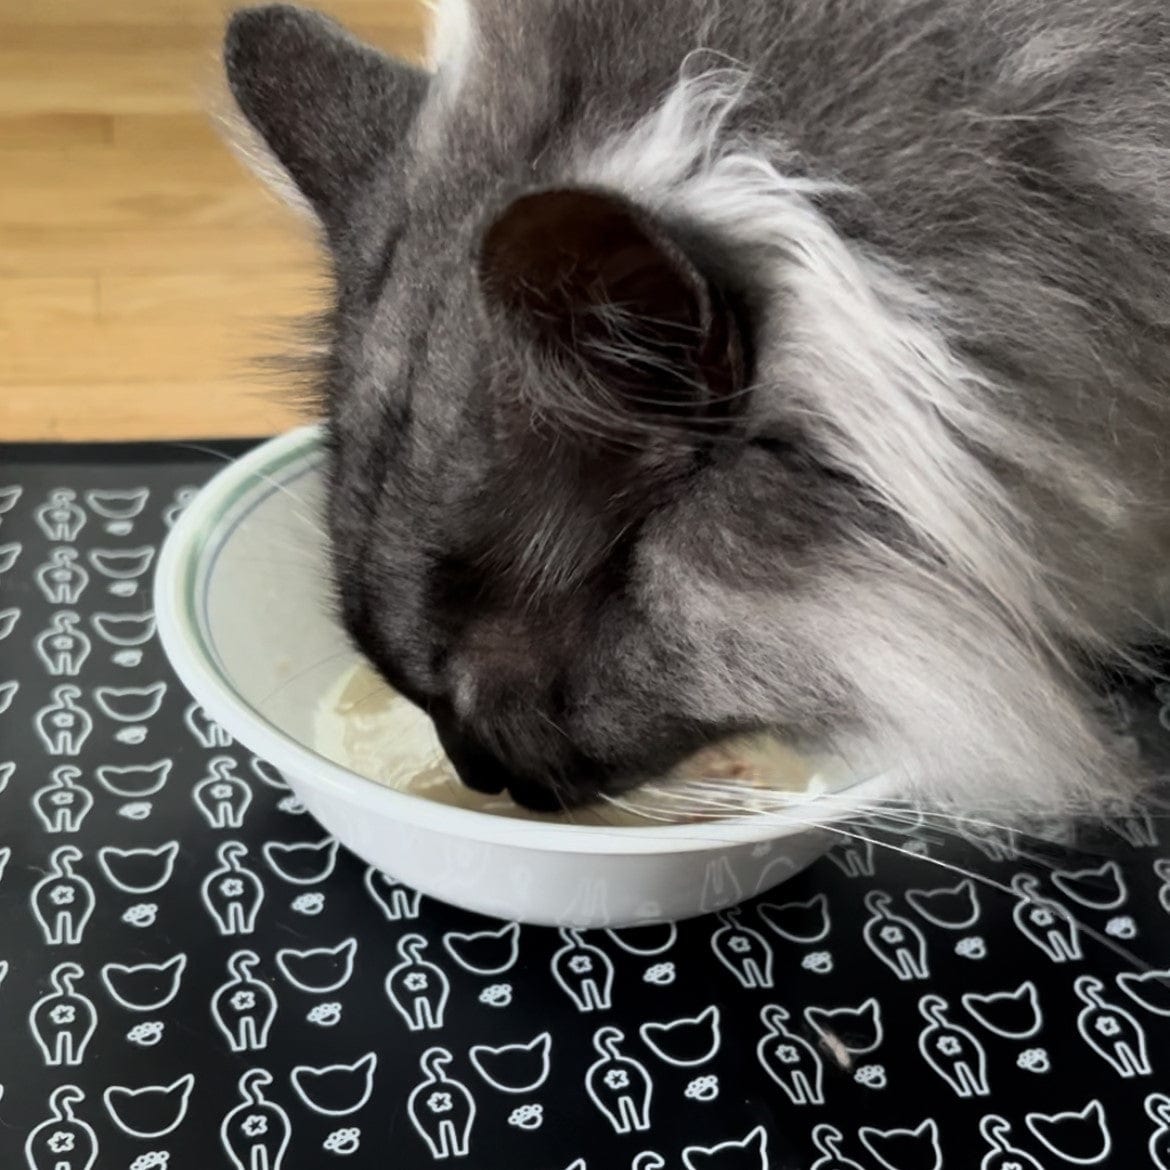 "The Nice & Tidy" Cat Food & Water Feeding Mat